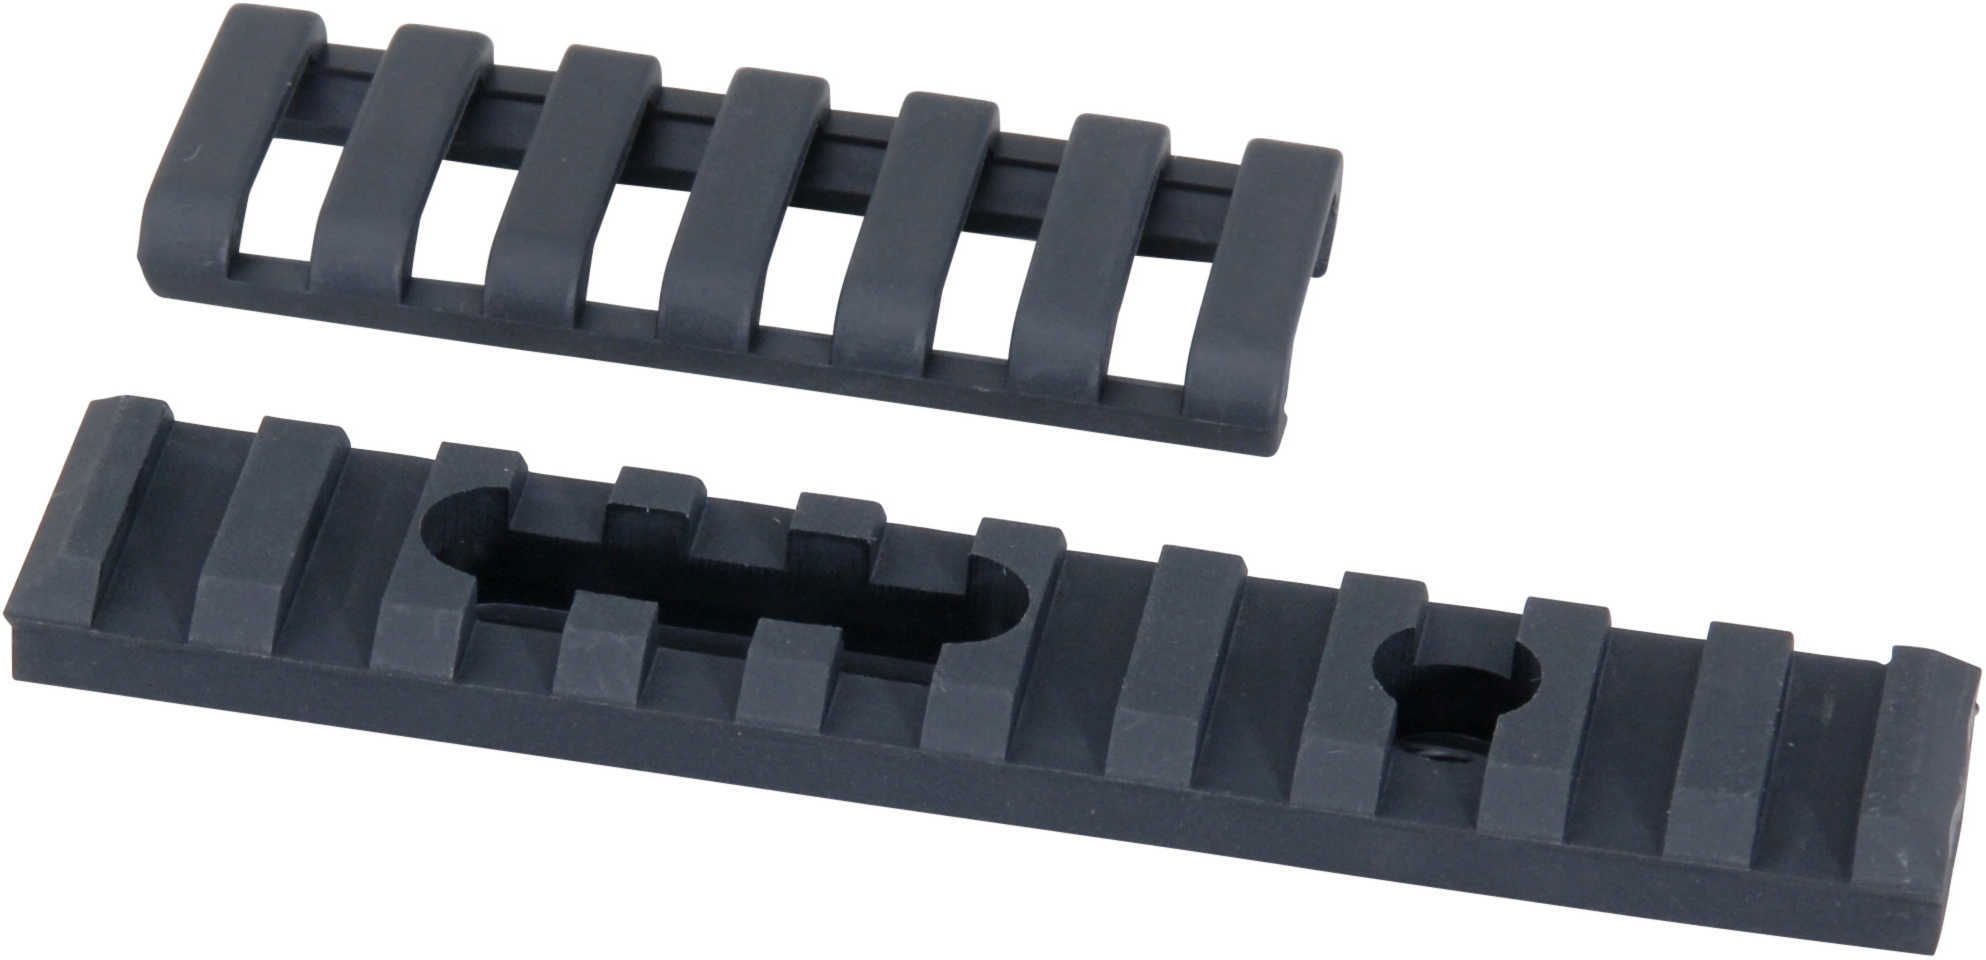 Ergo Grip Polymer Rail 1 Mounting Hole with Hardware Black 4751